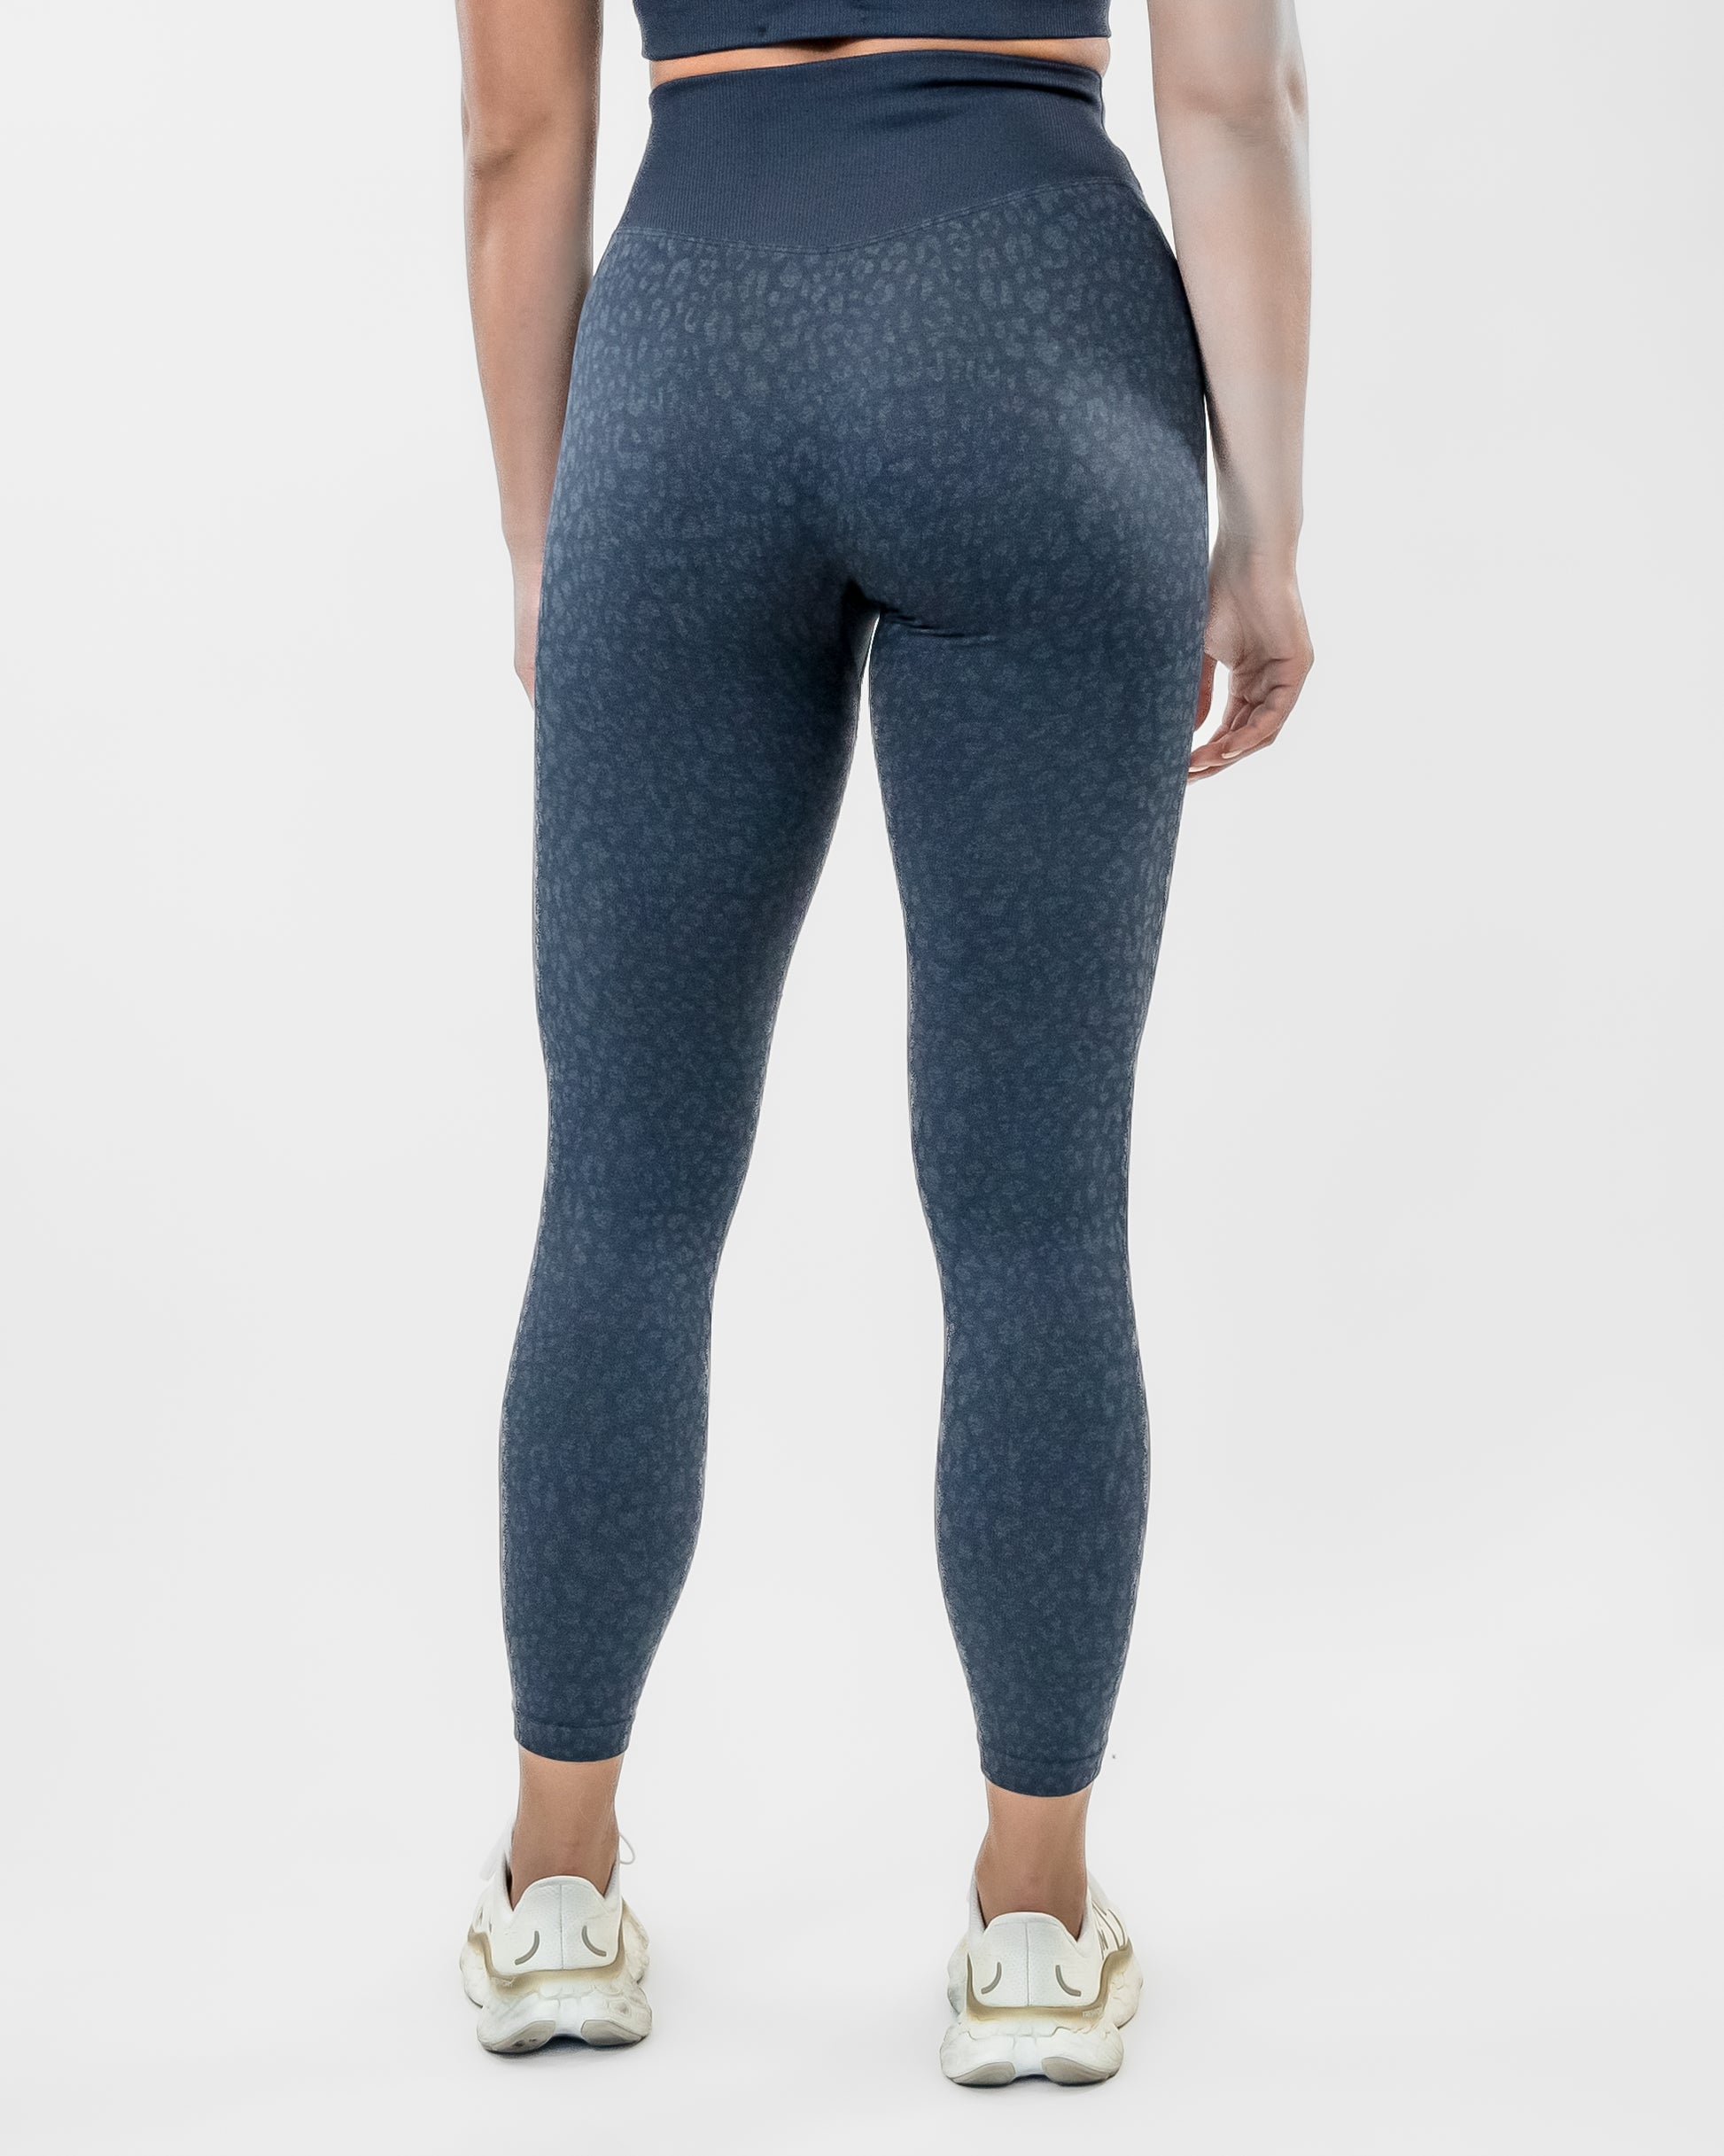 Women's Running Pants and Leggings Sale - berunner.com